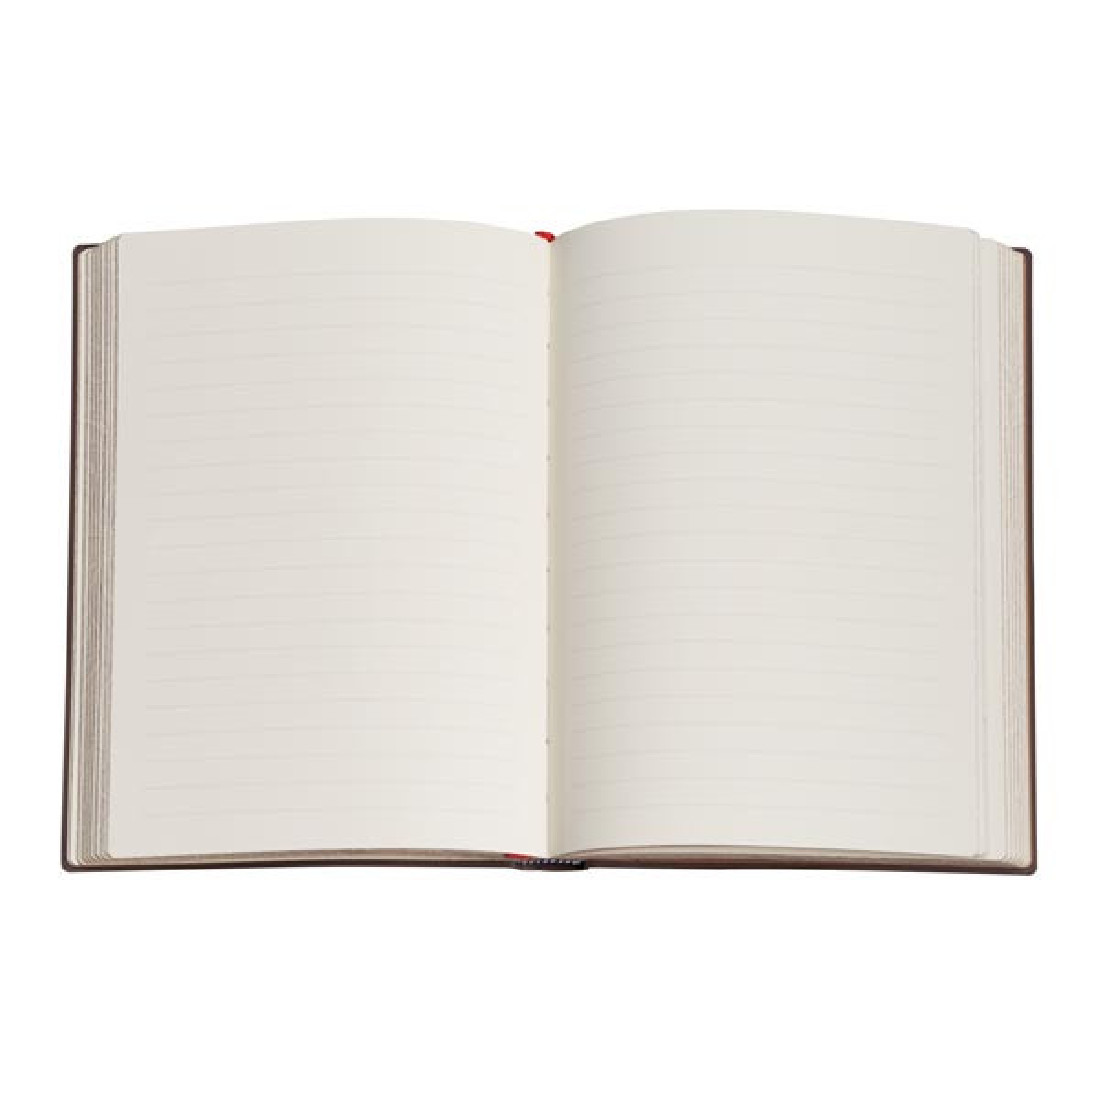 Paperblanks Safavid Indigo Mini 10X14 lined notebook, hard cover, magnetic closure